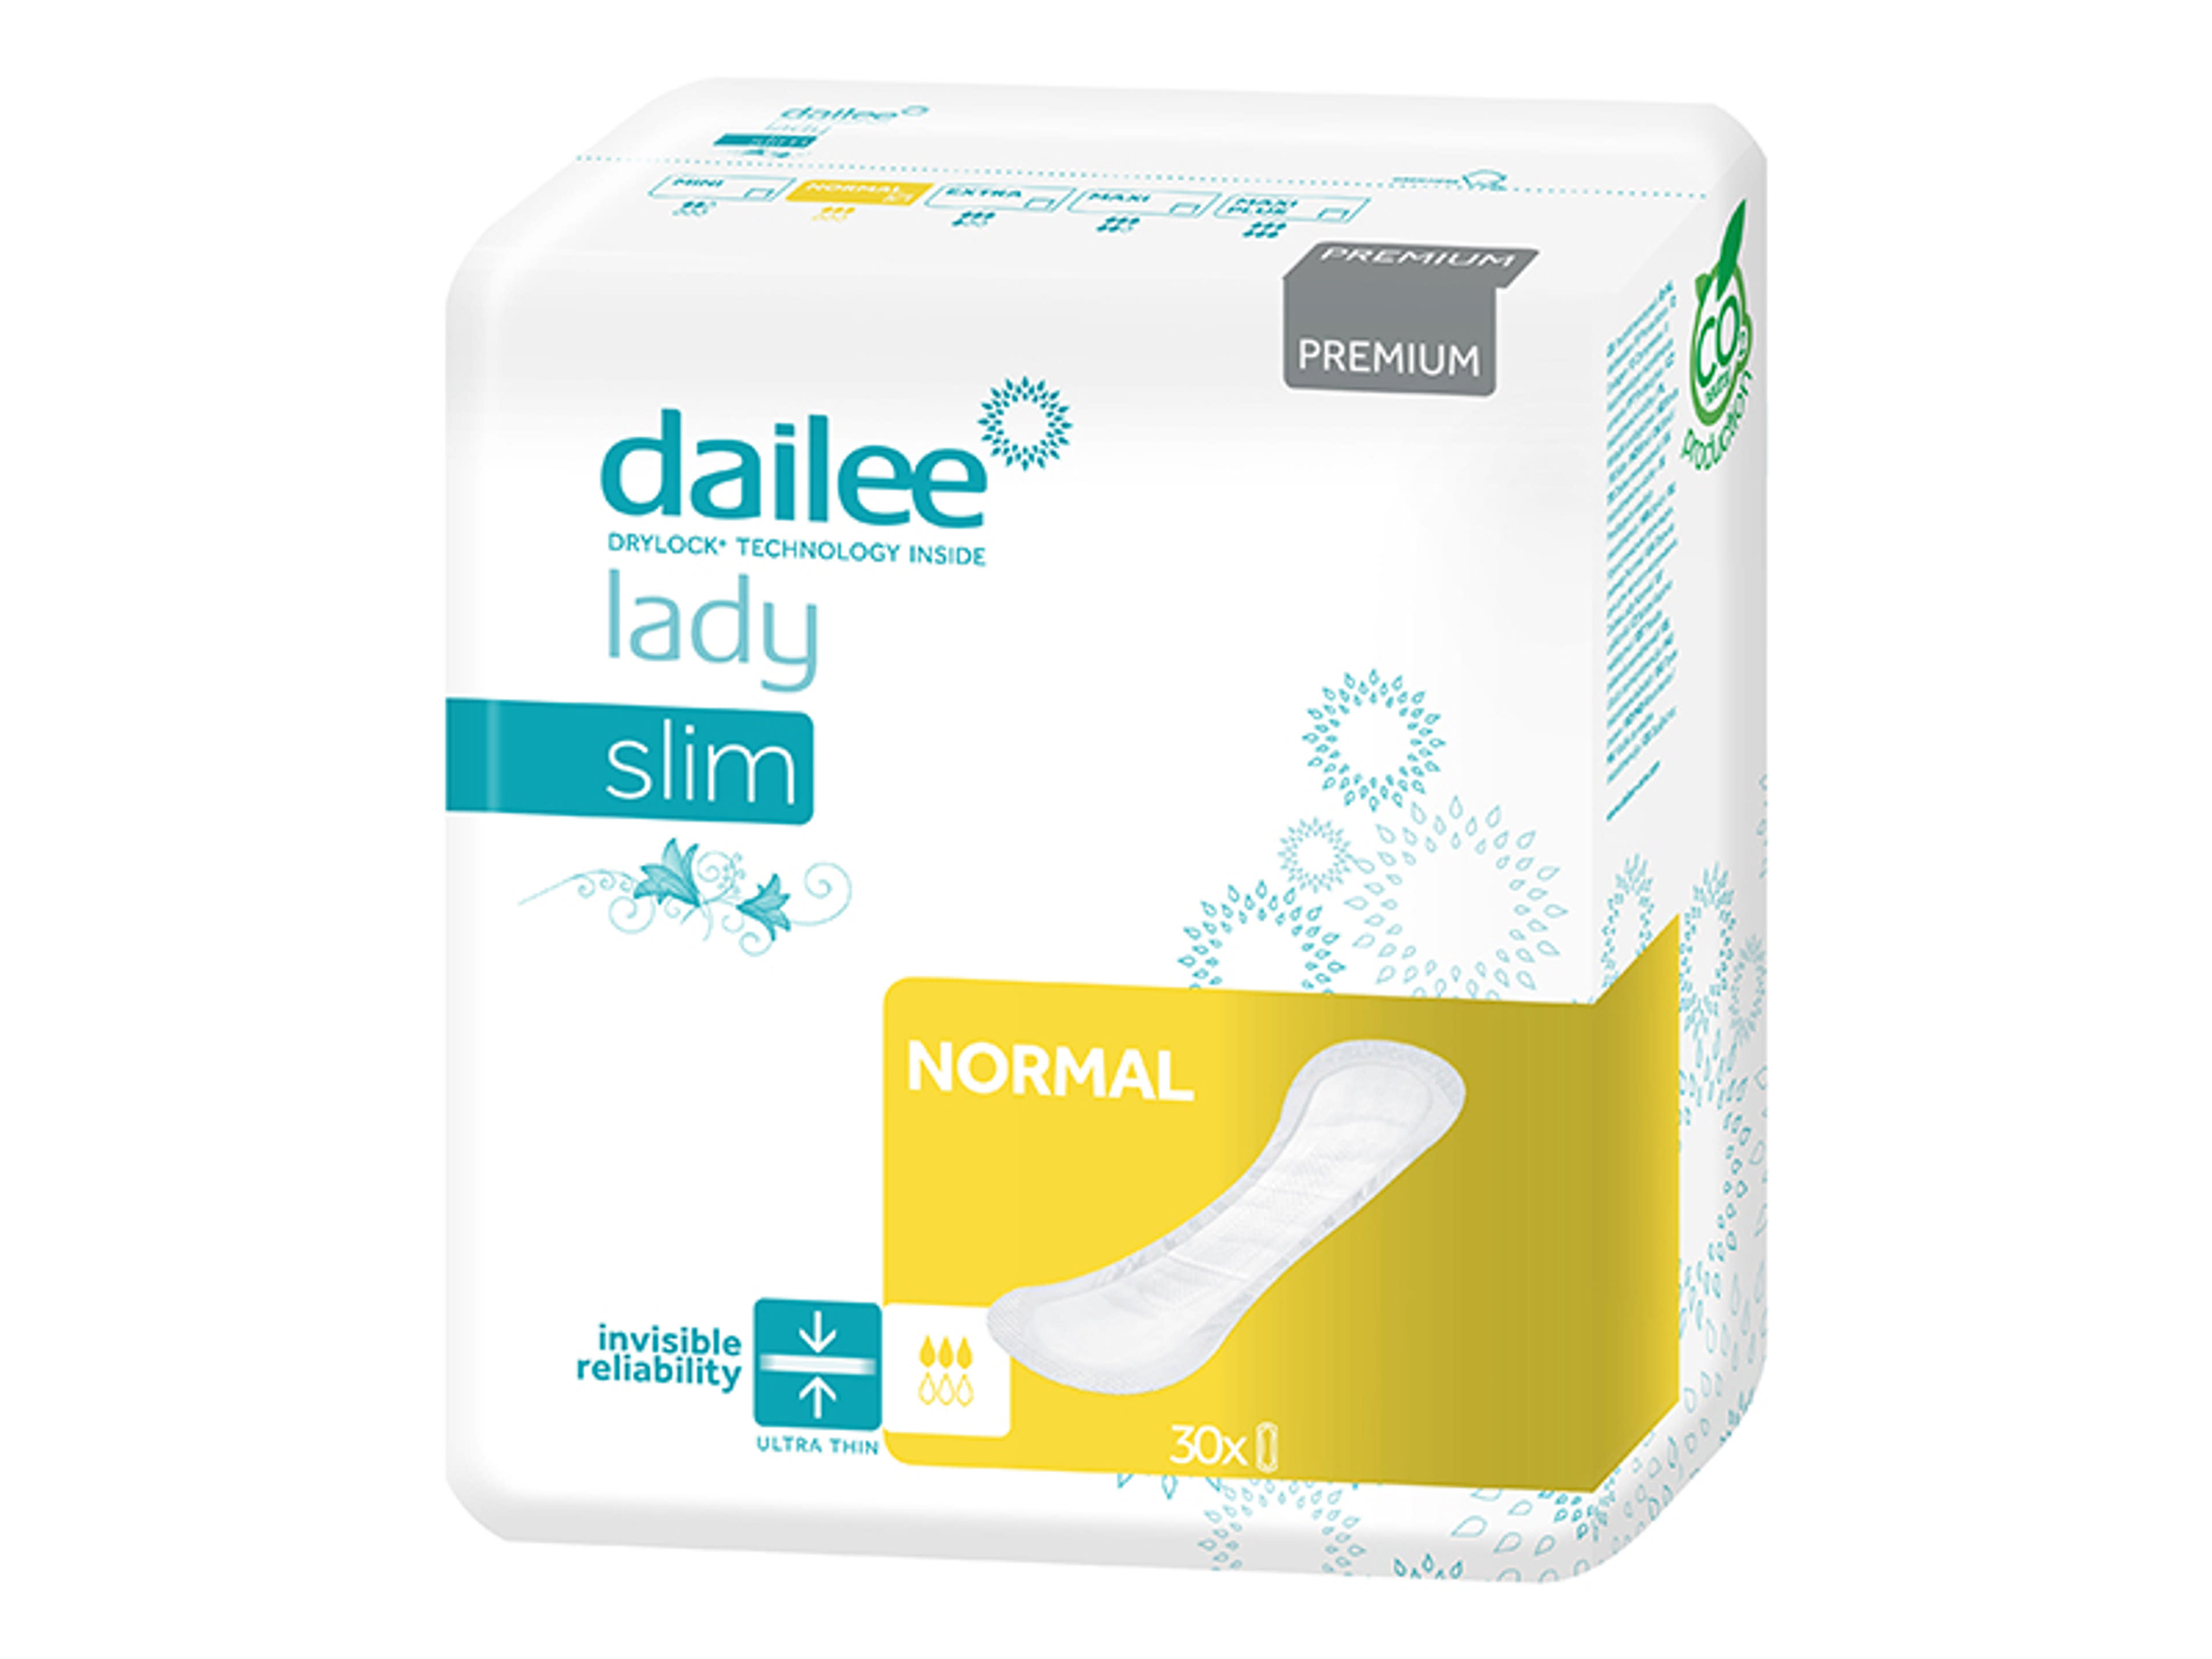 Dailee Lady Premium Slim Normal inkontinencia betét – 30 db